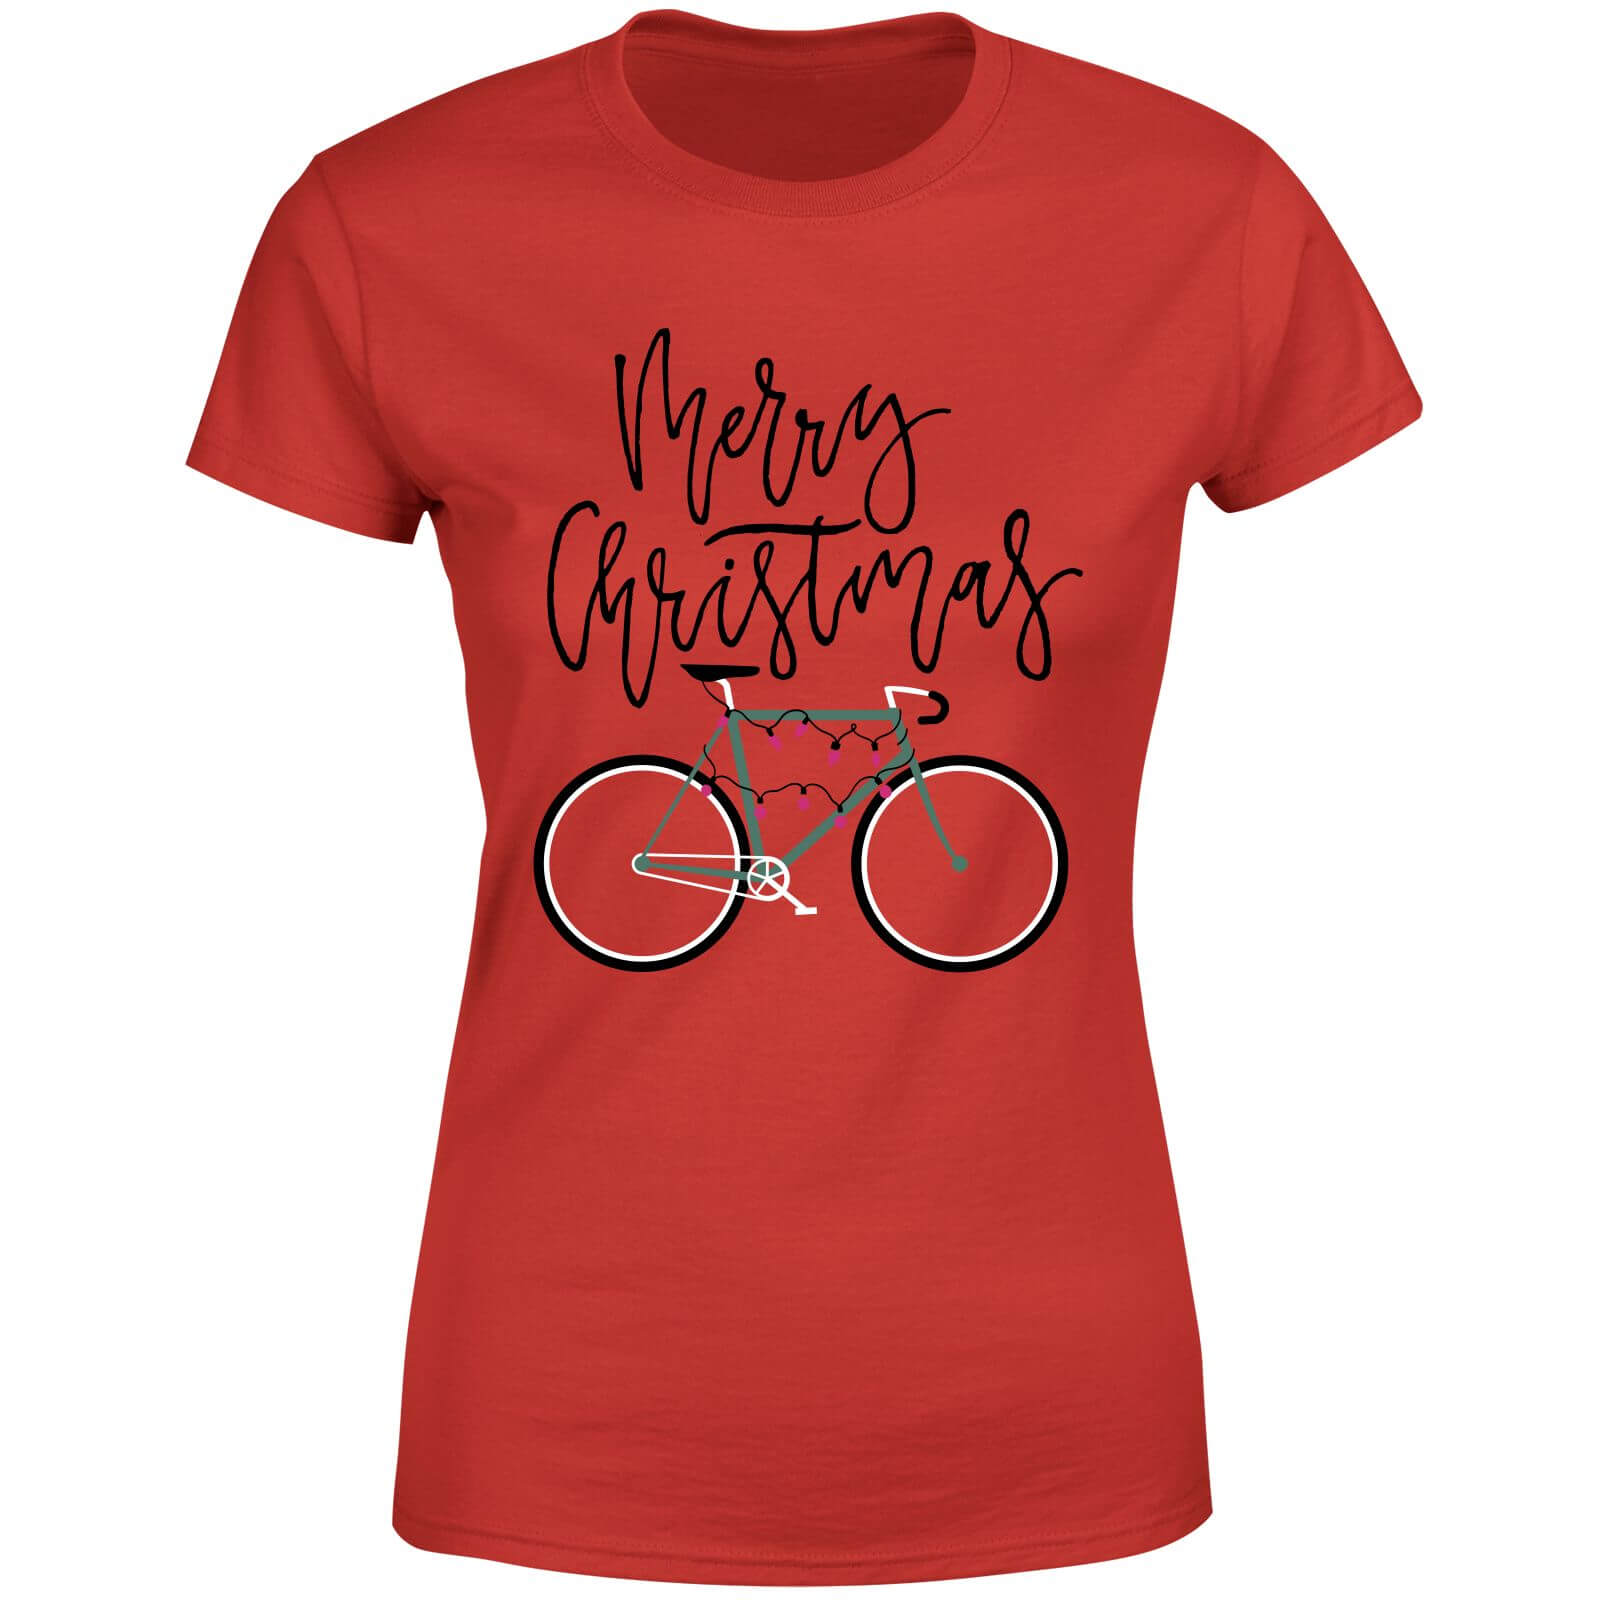 Bike Lights Women's Christmas T-Shirt - Red - XS - Red